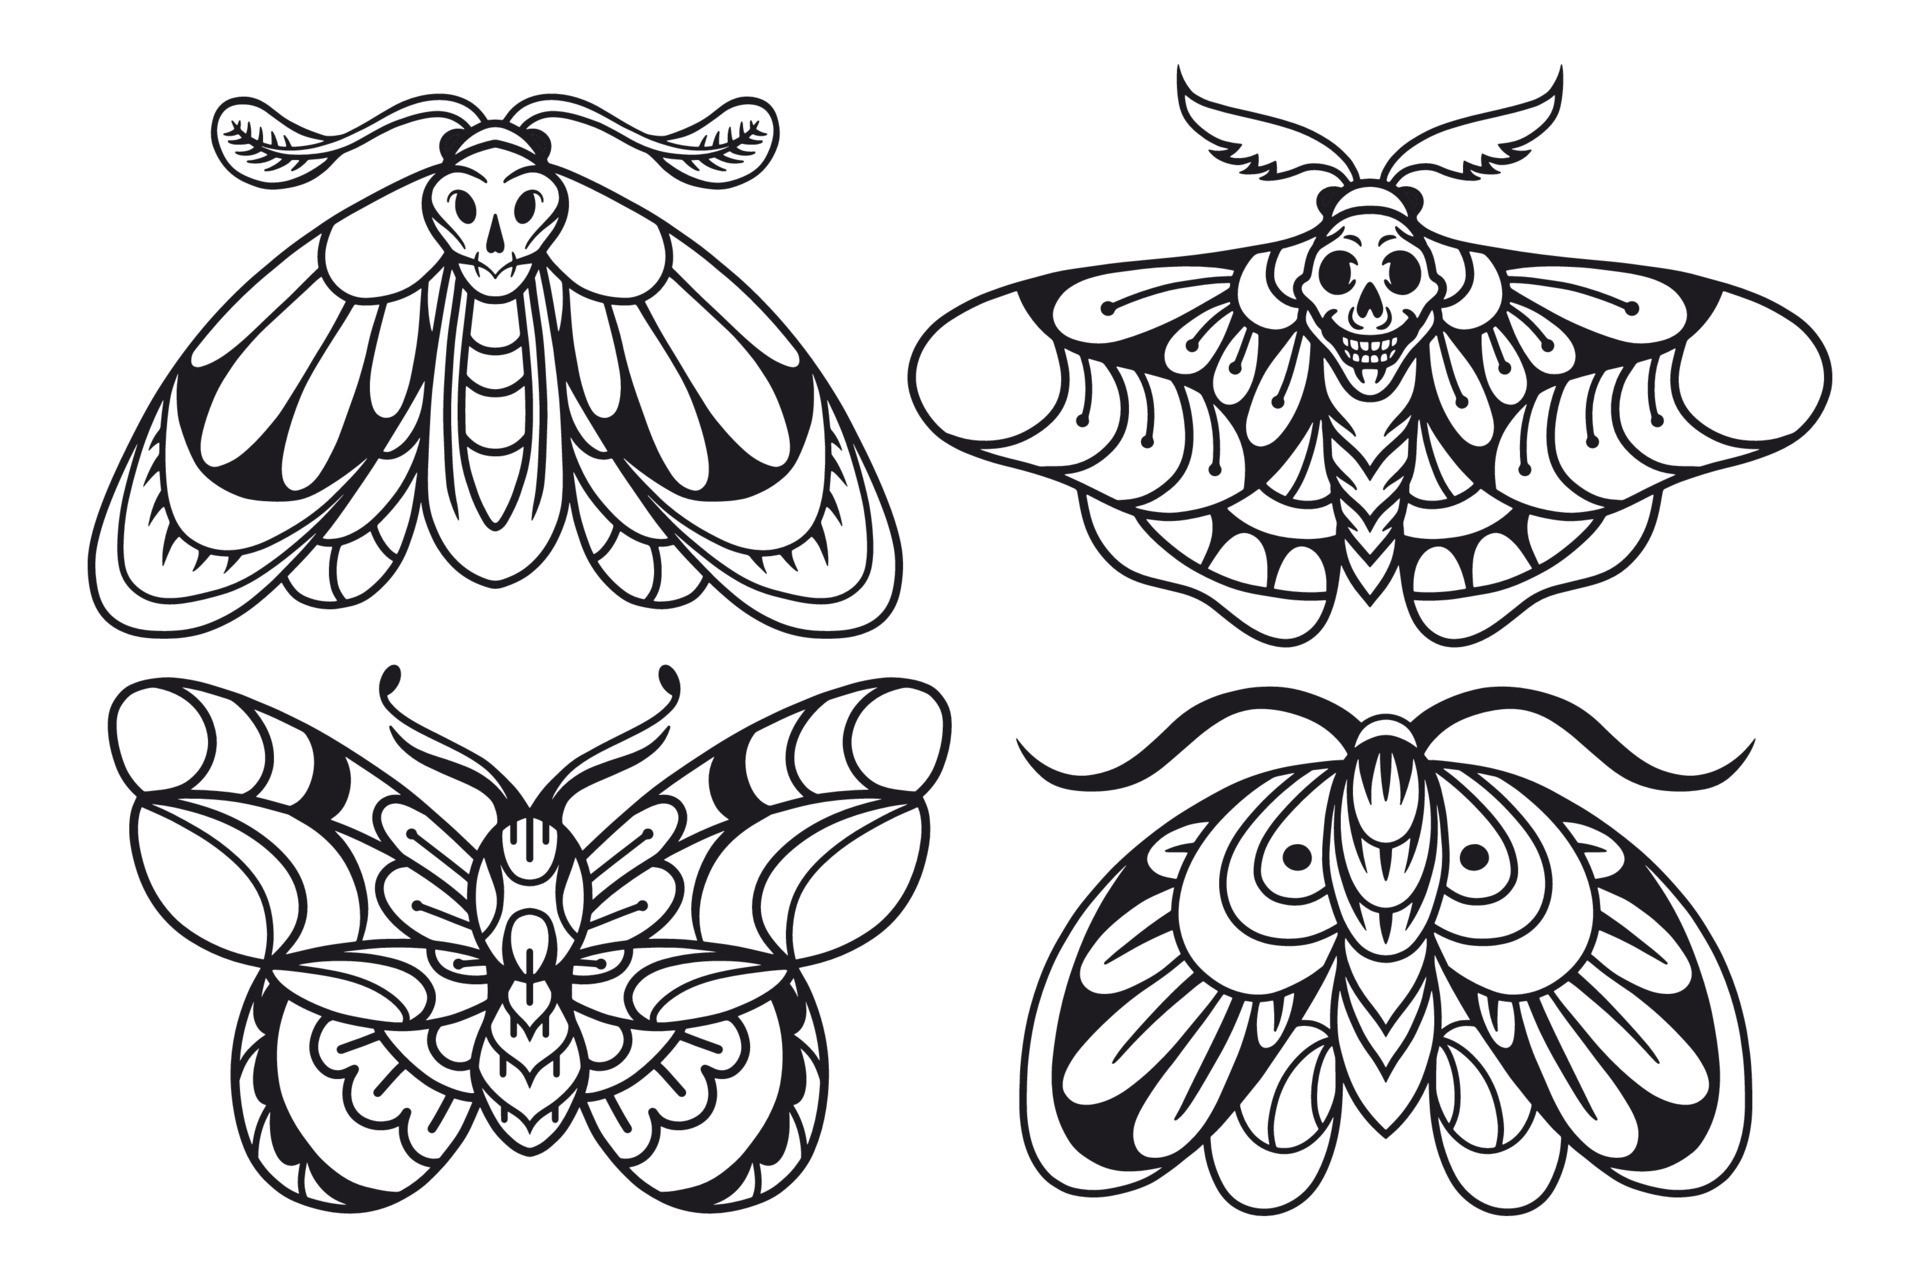 28 Beautiful Black and Grey Butterfly Tattoos  TattooBlend